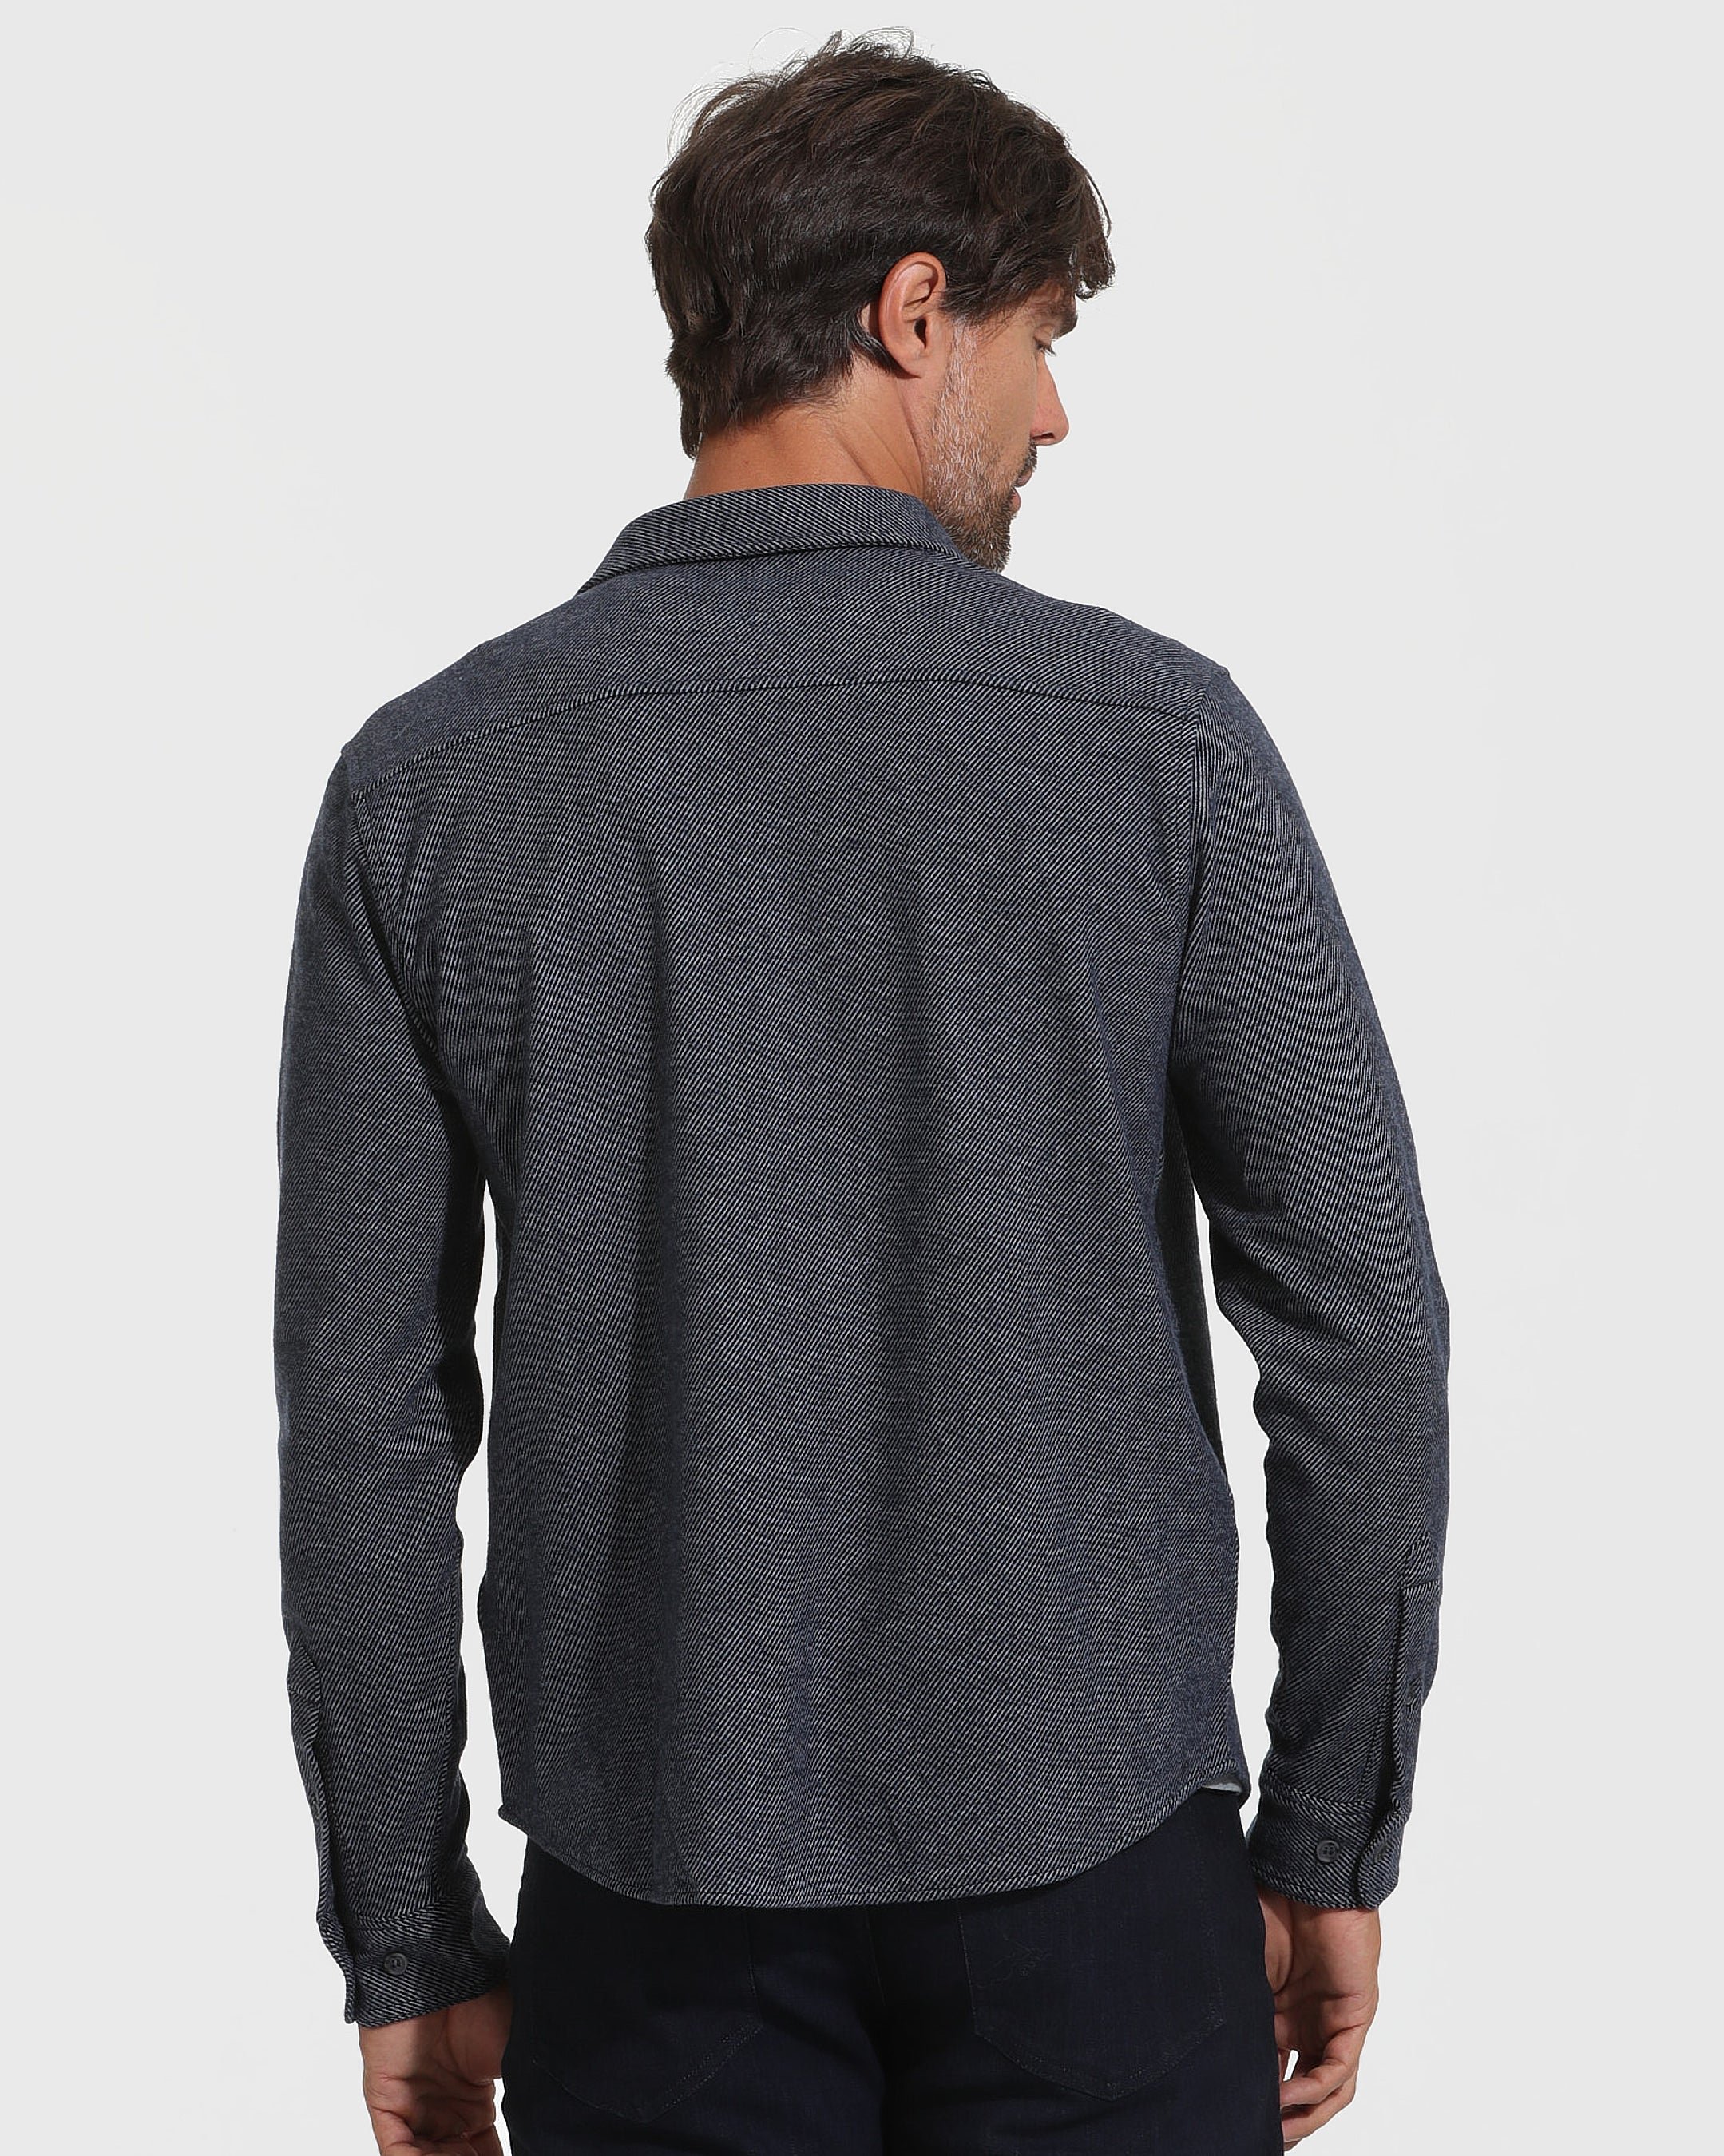 Heather Sweater Button Up Shirt 2-Pack